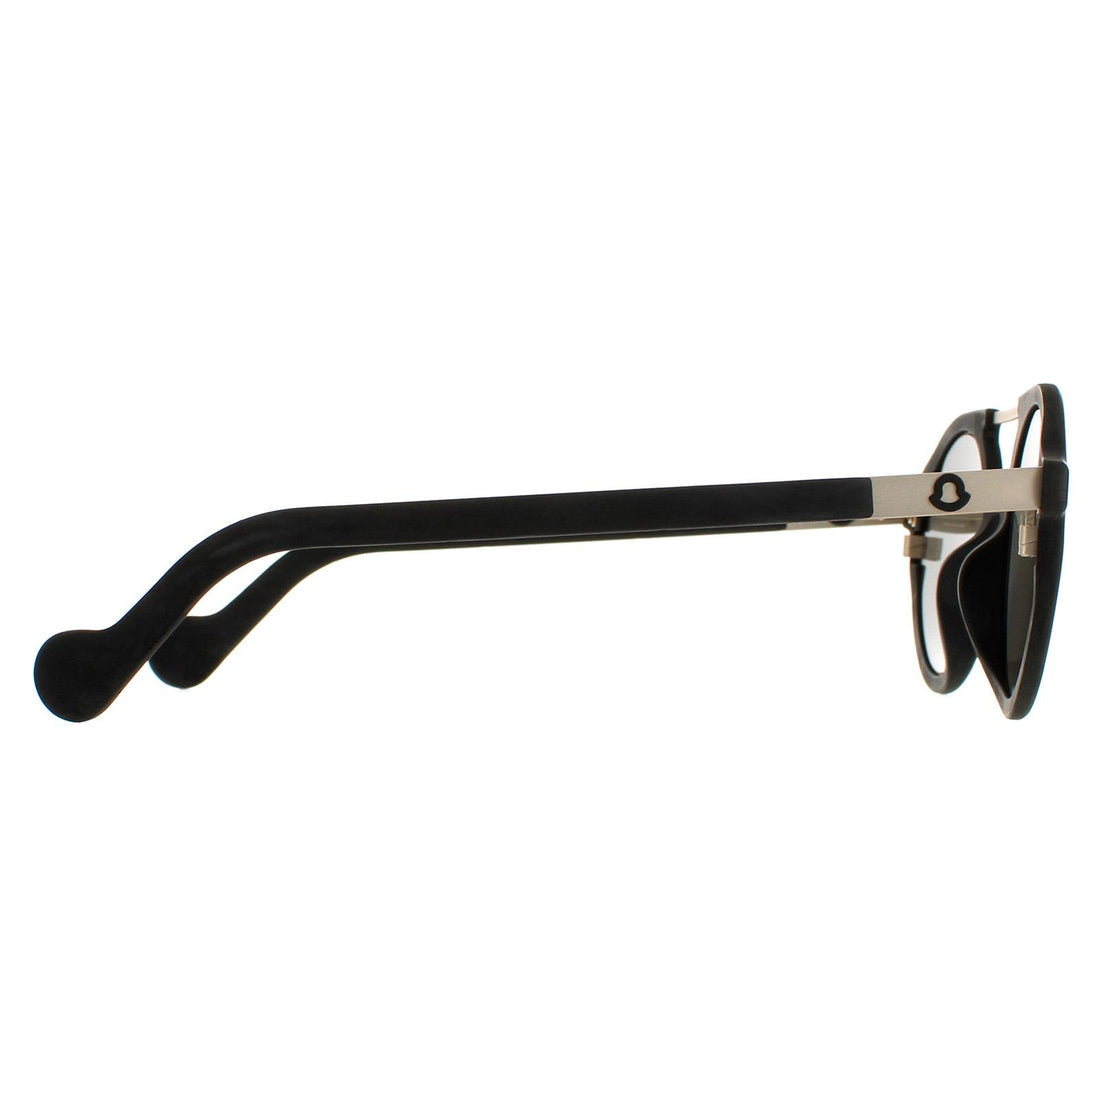 Moncler Sunglasses ML0083 02C Rubber Black Silver Mirror